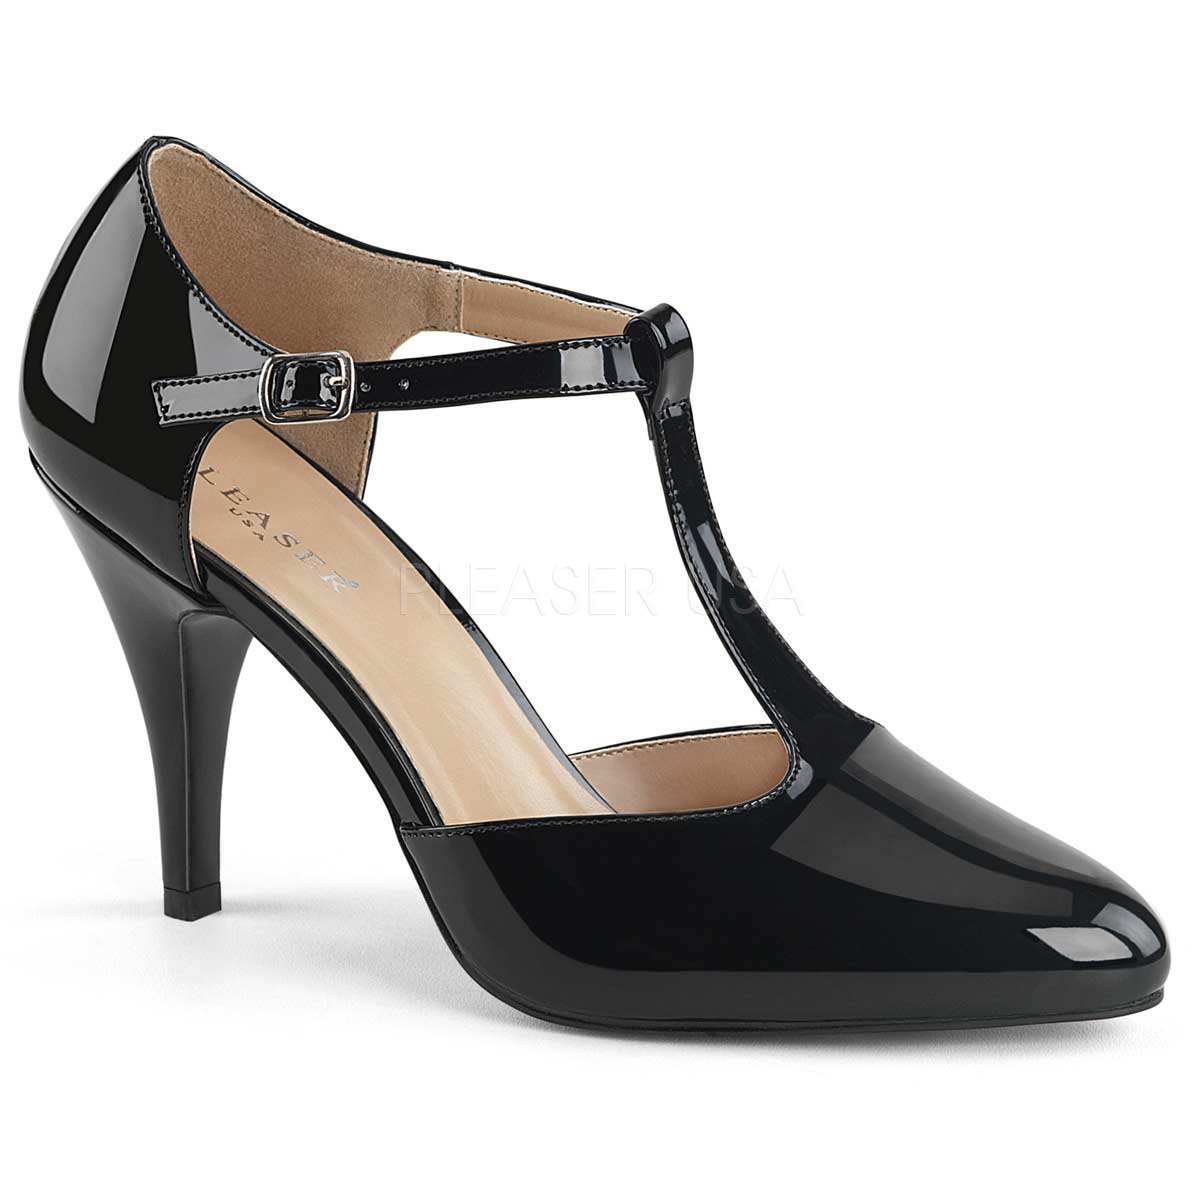 Pleaser Dream-425 - Black Pat in Sexy Heels & Platforms - $43.99